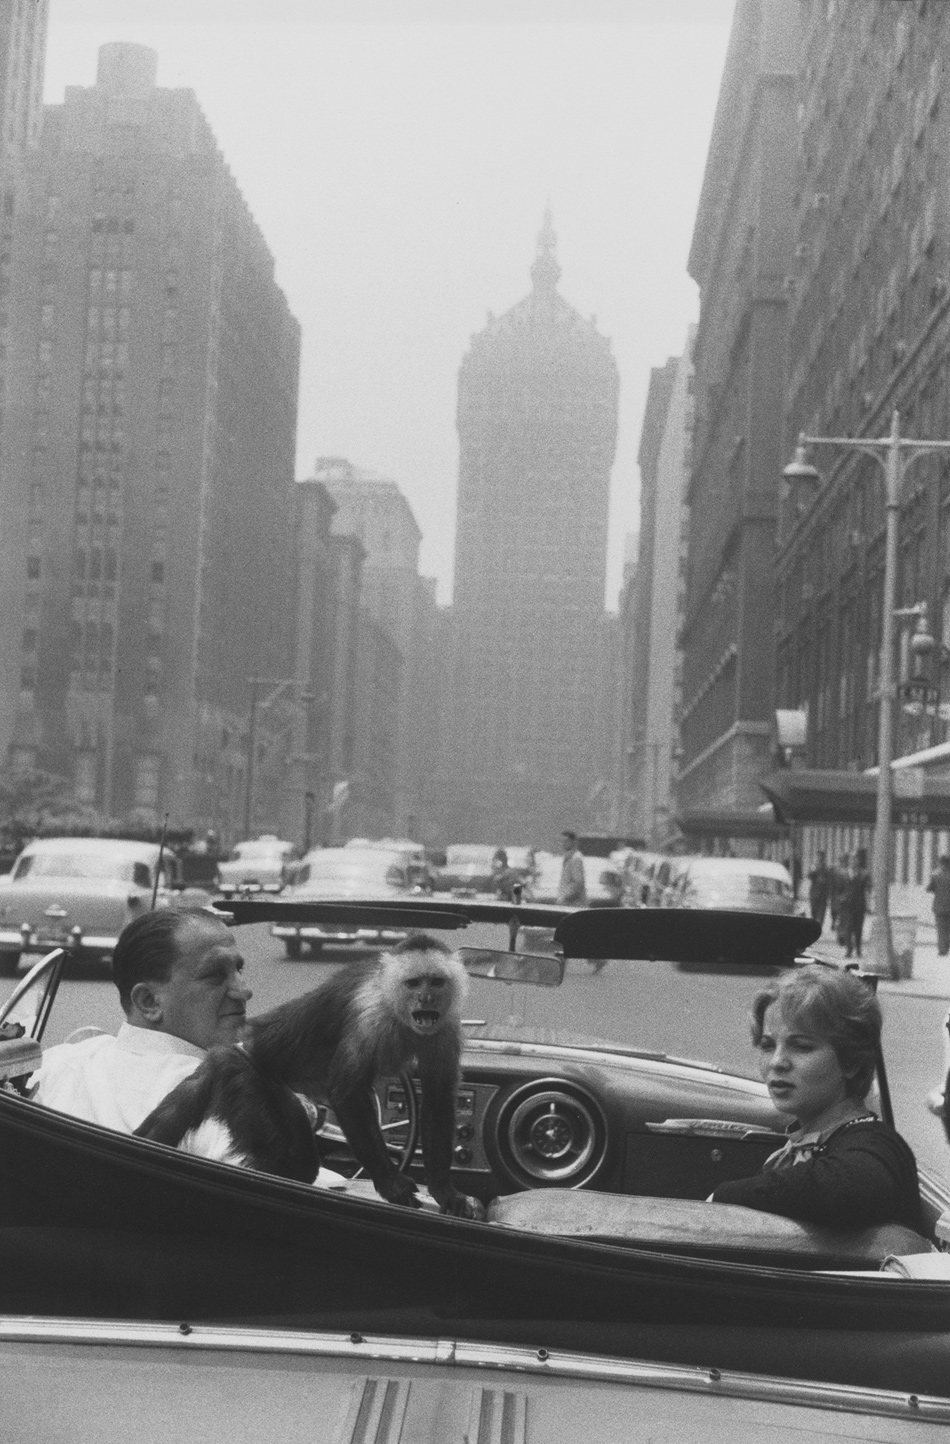 Garry Winogrand: Park Avenue, New York, 1959